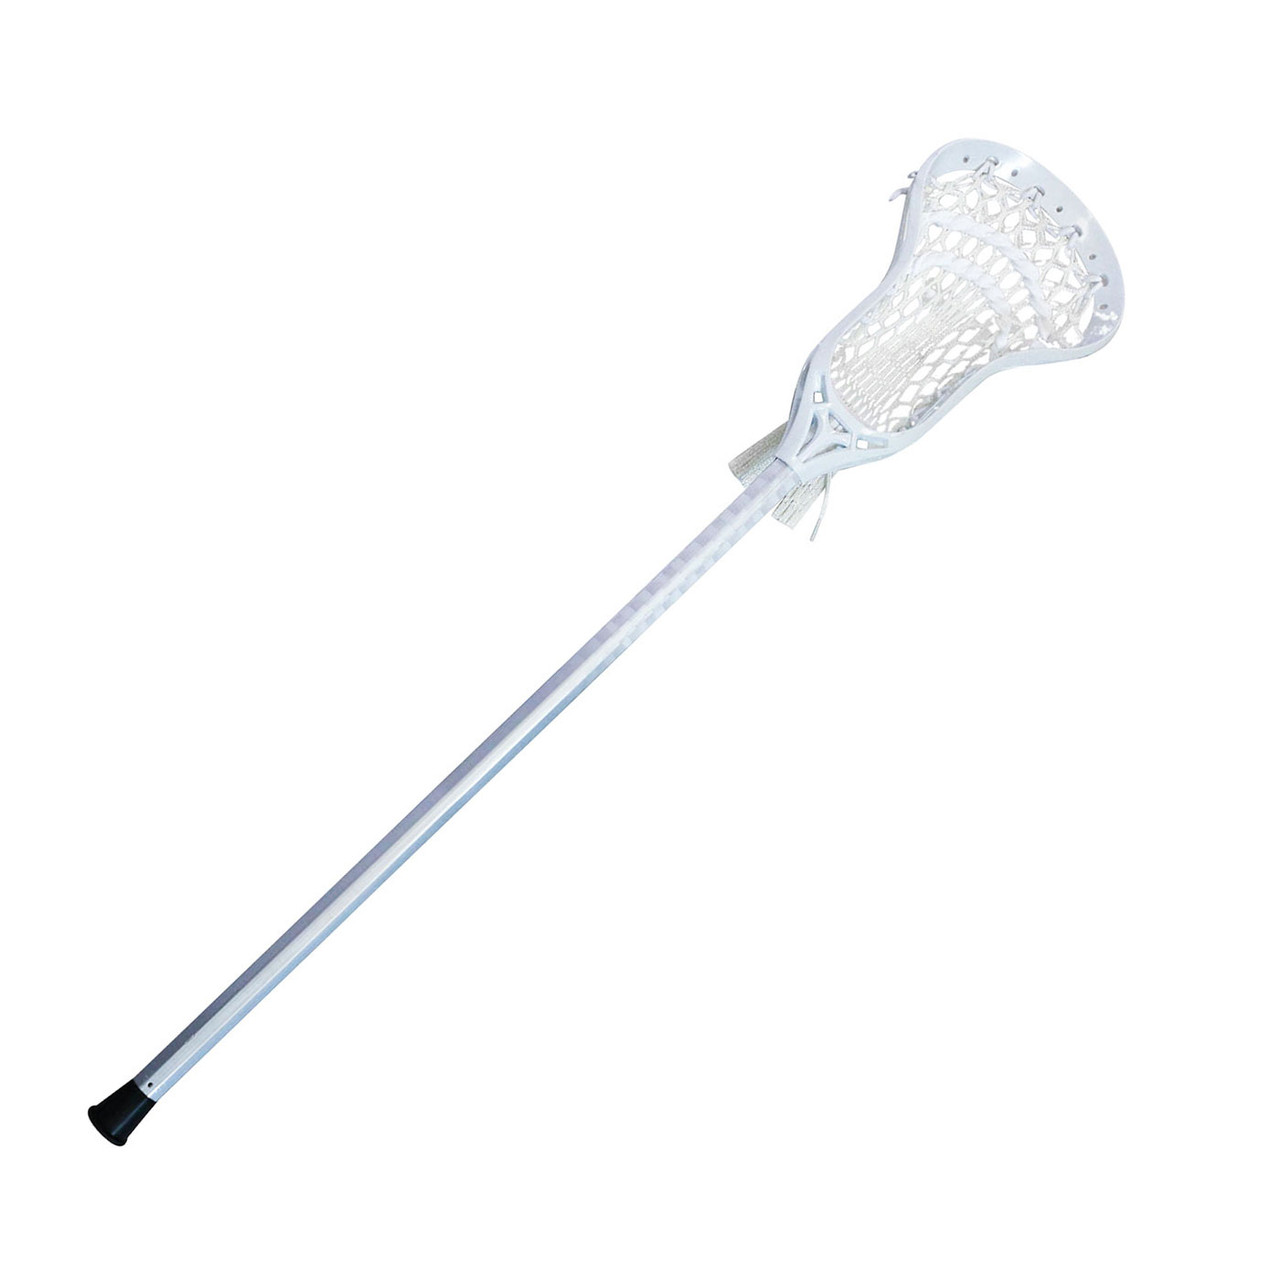 Champro Sports LRX7 Lacrosse Sticks - Athletic Stuff